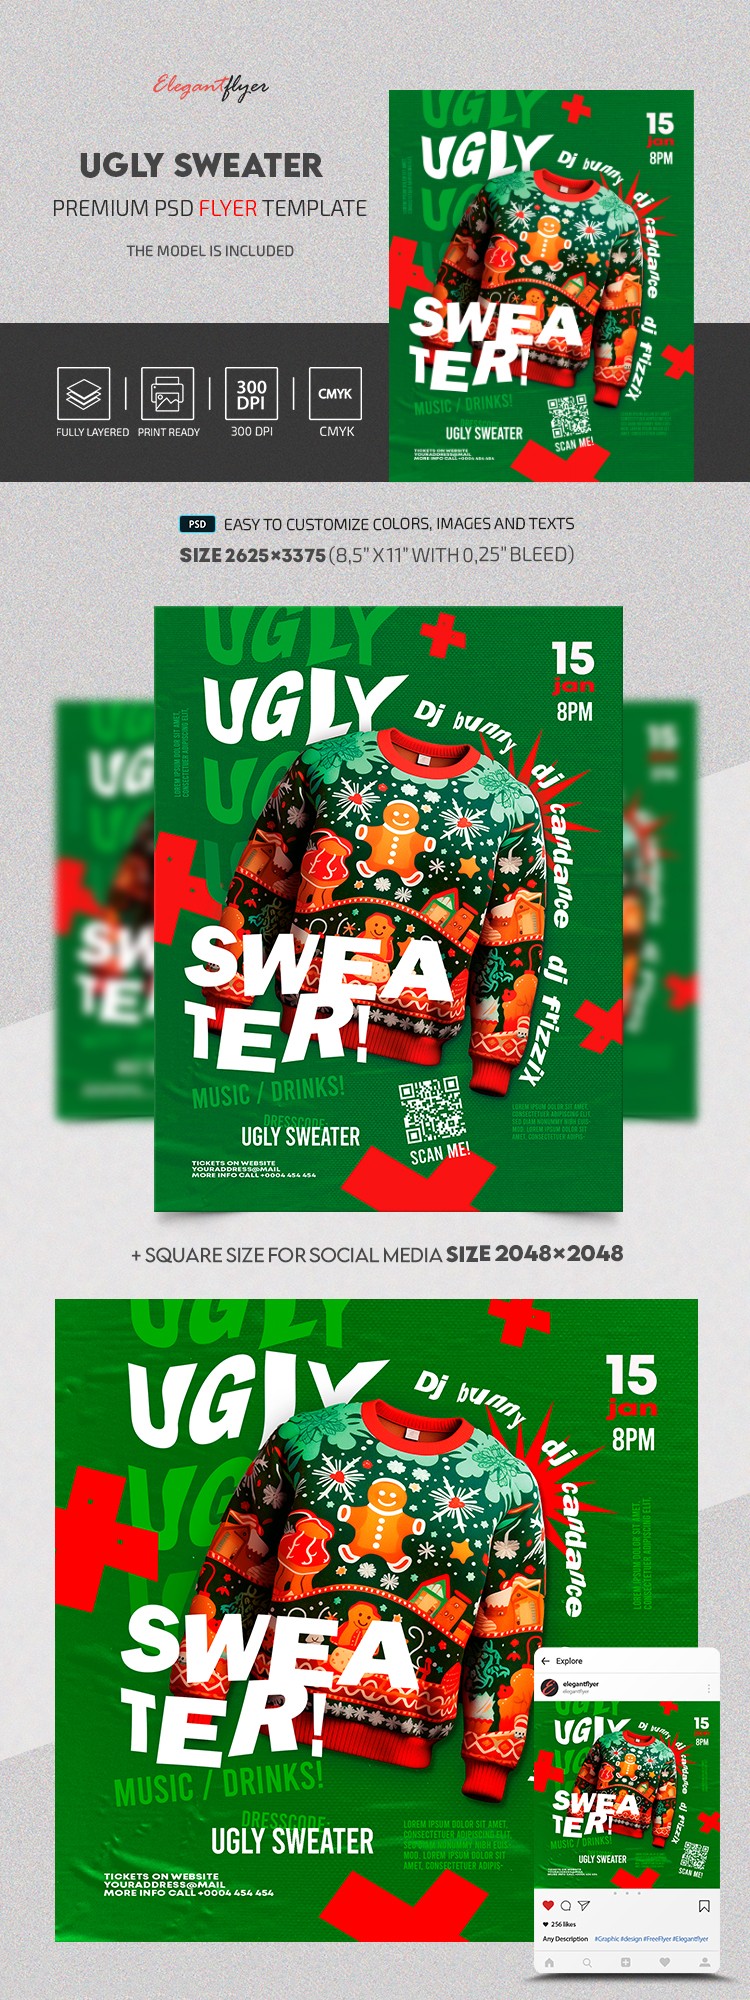 Ugly Sweater by ElegantFlyer